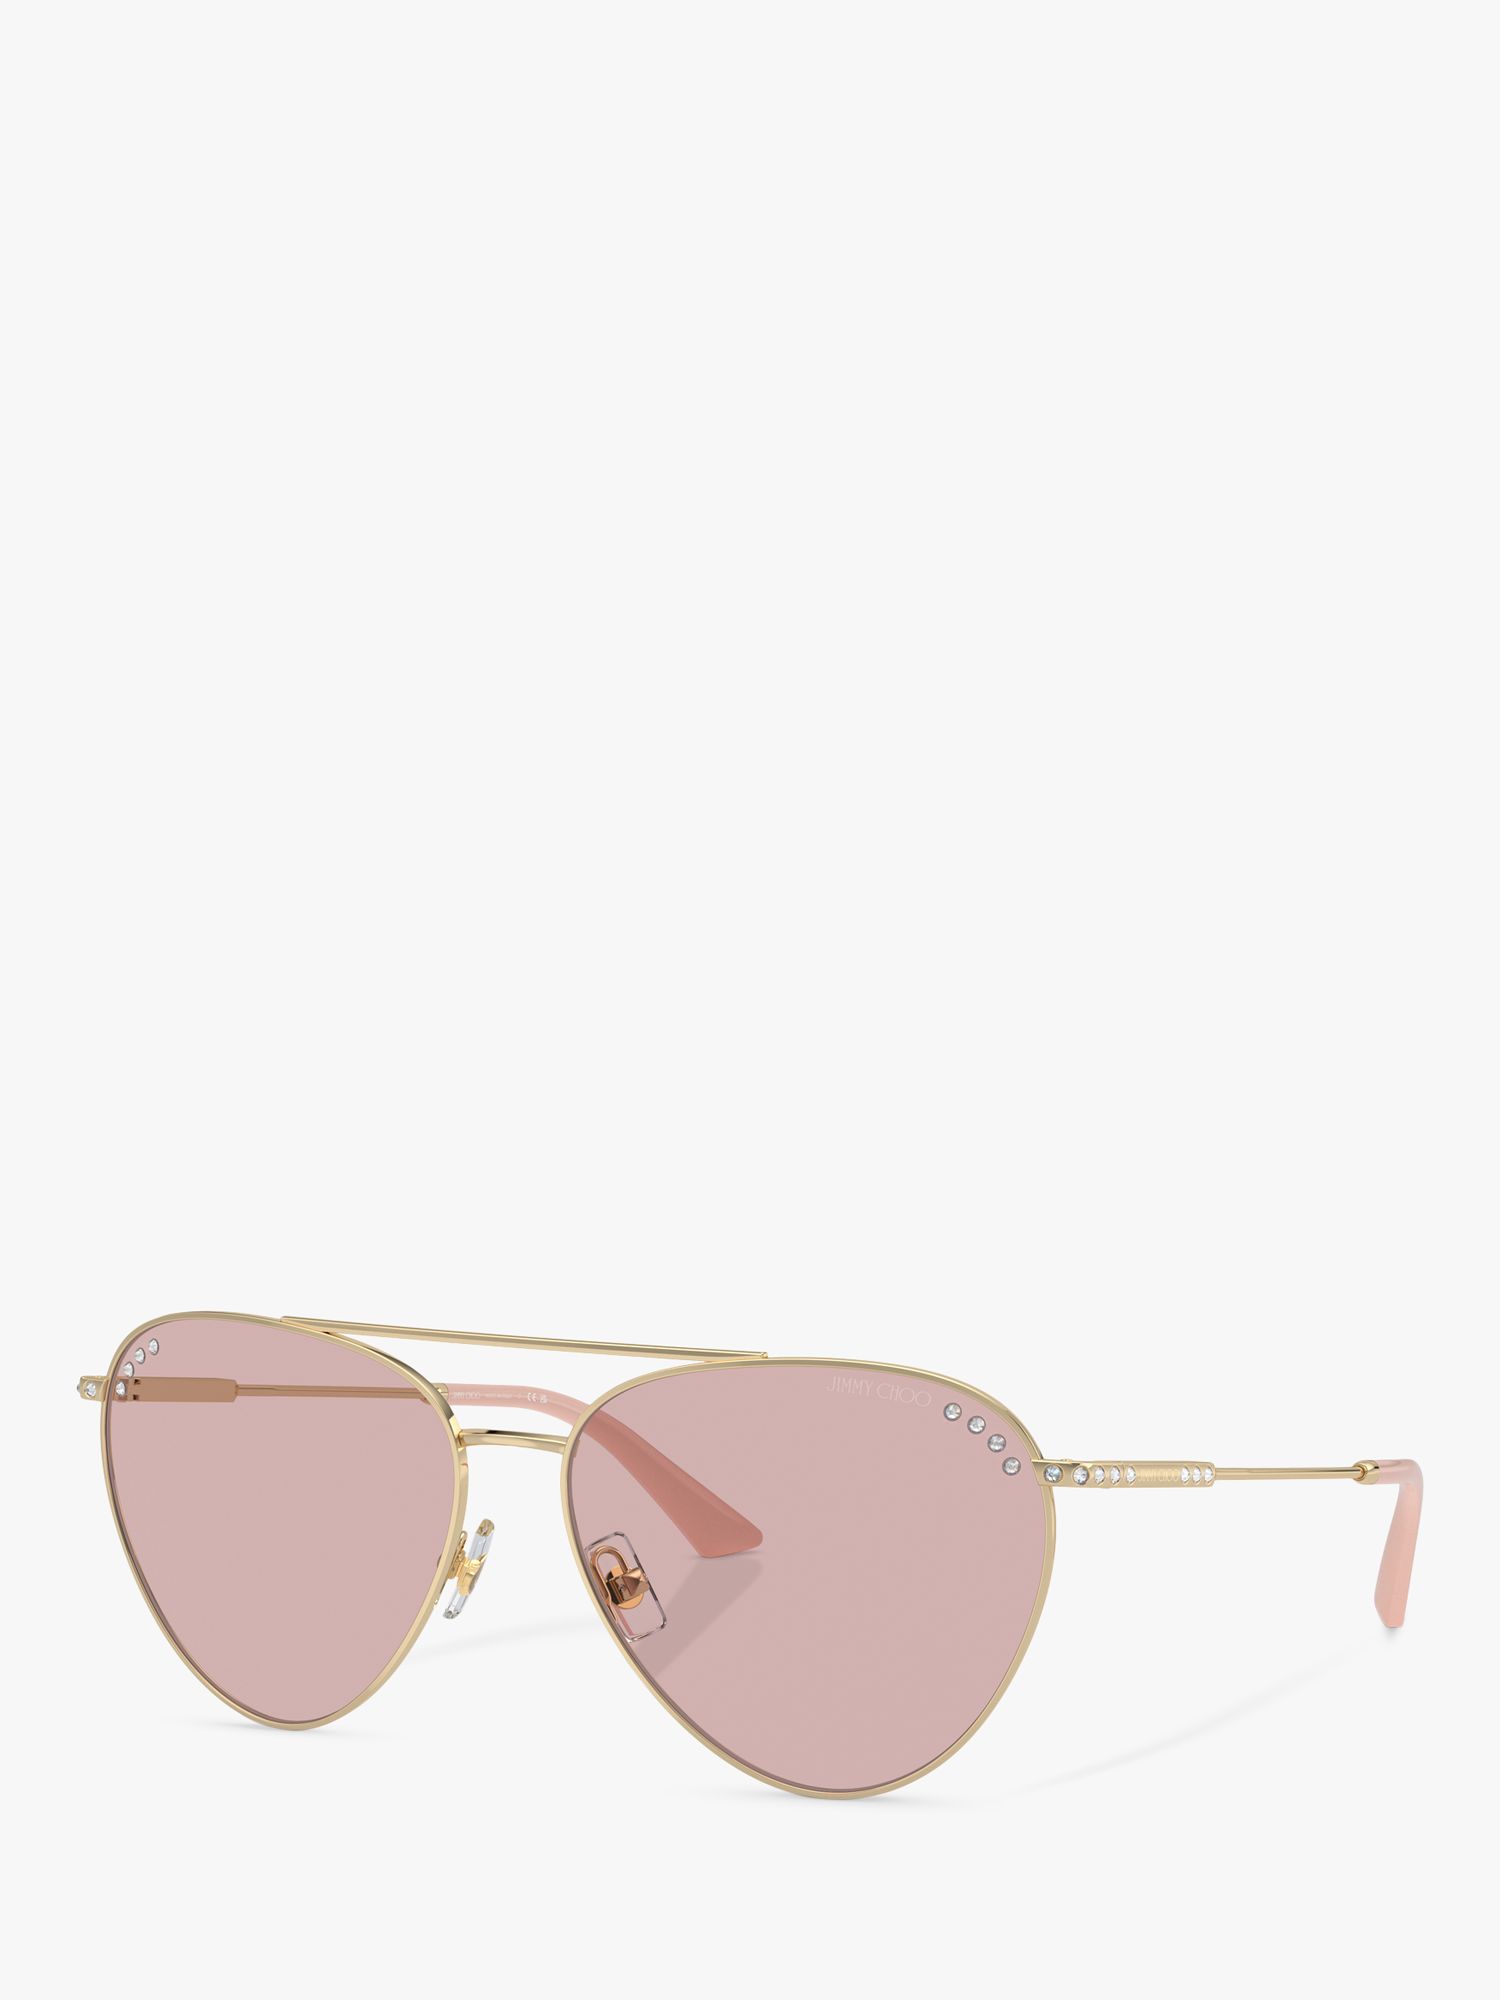 Jimmy Choo JC4002B Women's Aviator Sunglasses, Pale Gold/Pink